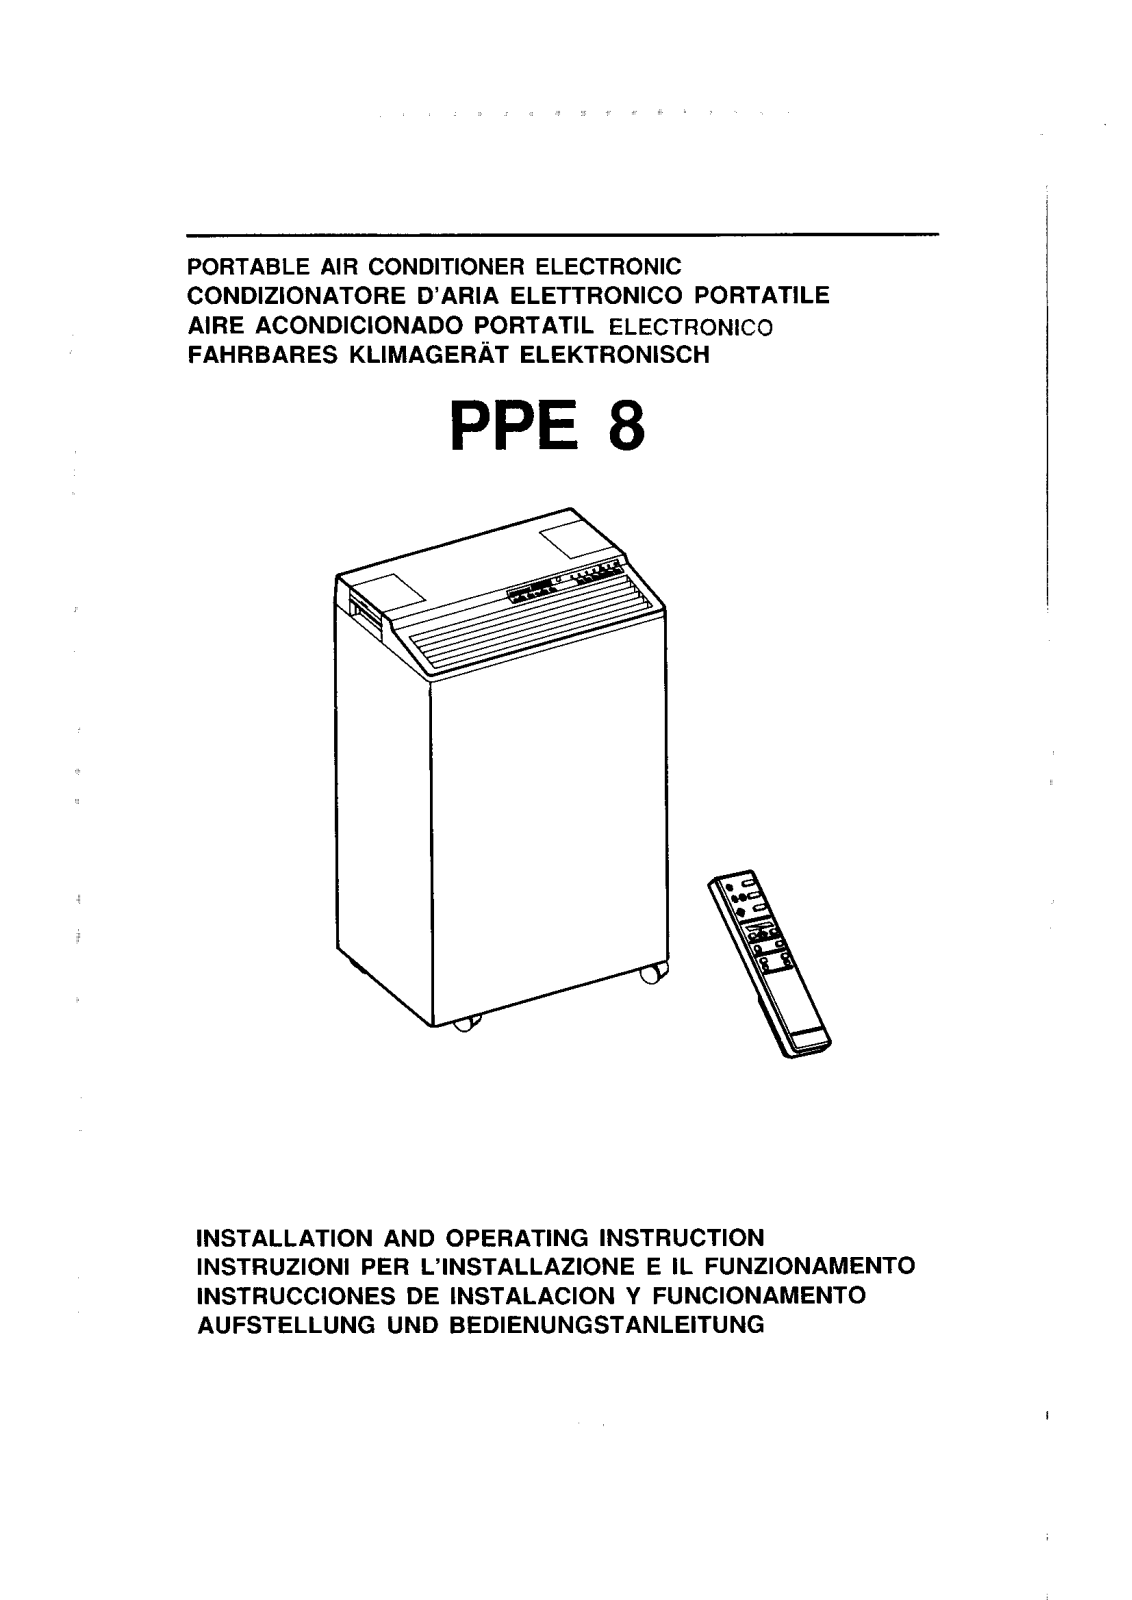 AEG PPE8 User Manual